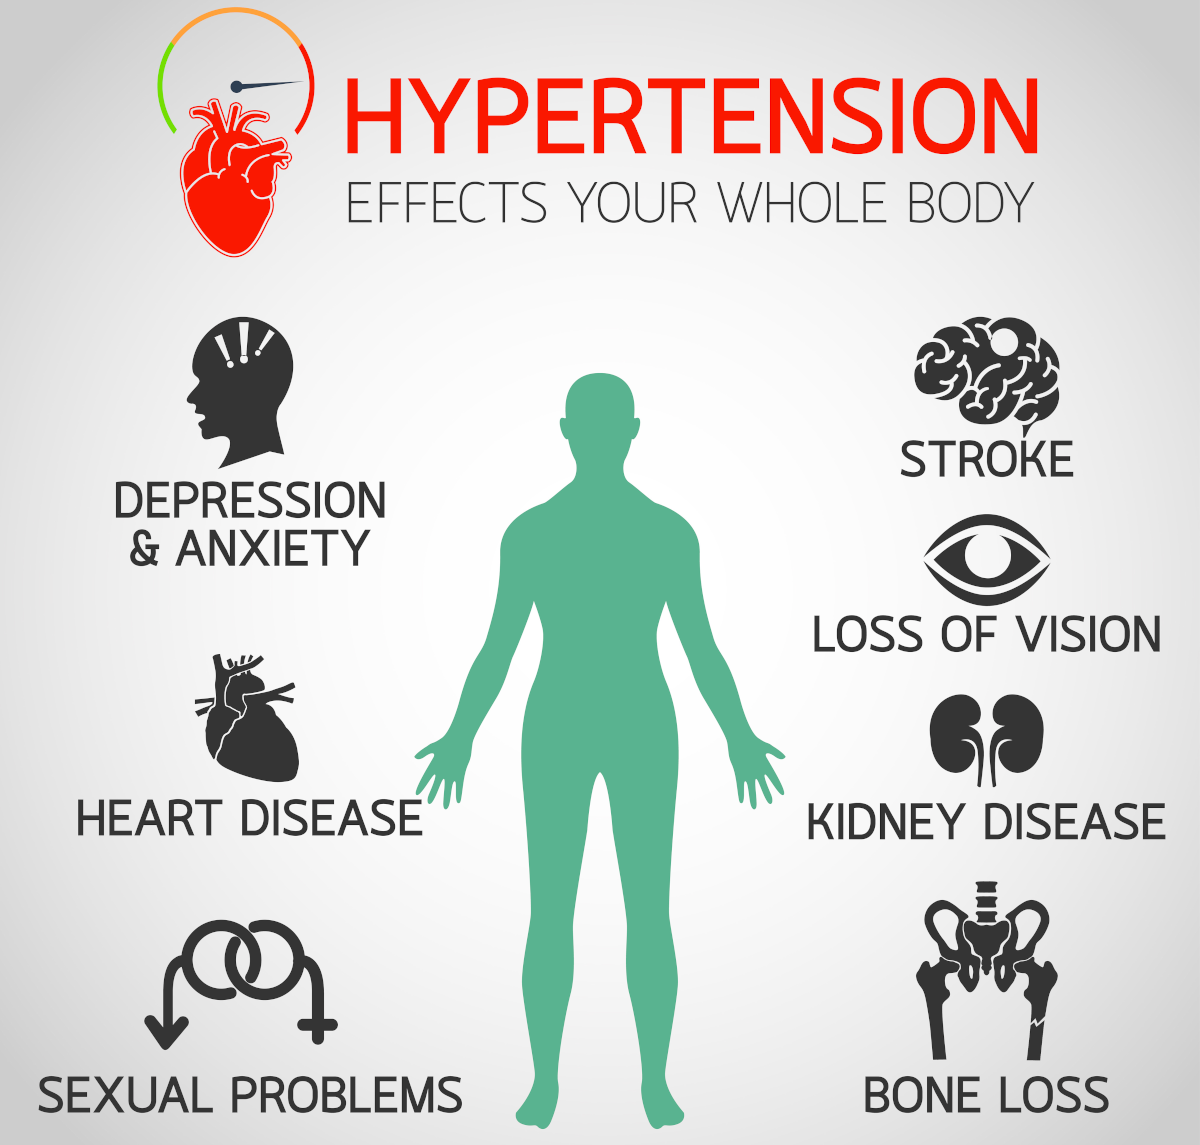 IDIOPATHIC HYPERTENSIA / stable arterial pressure - hypertension